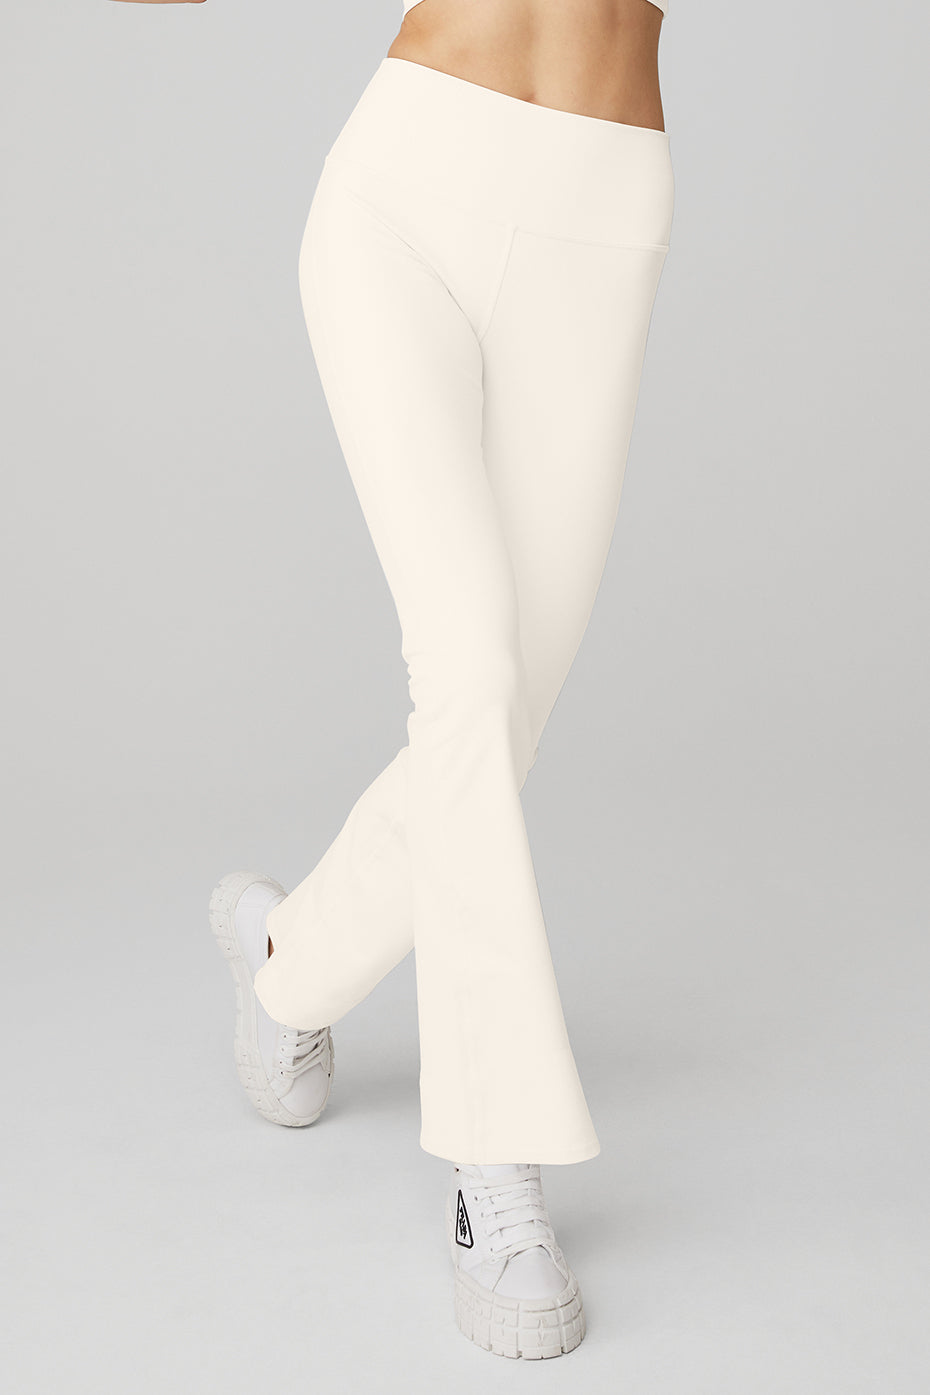 alo 7/8 Airbrush Legging in White